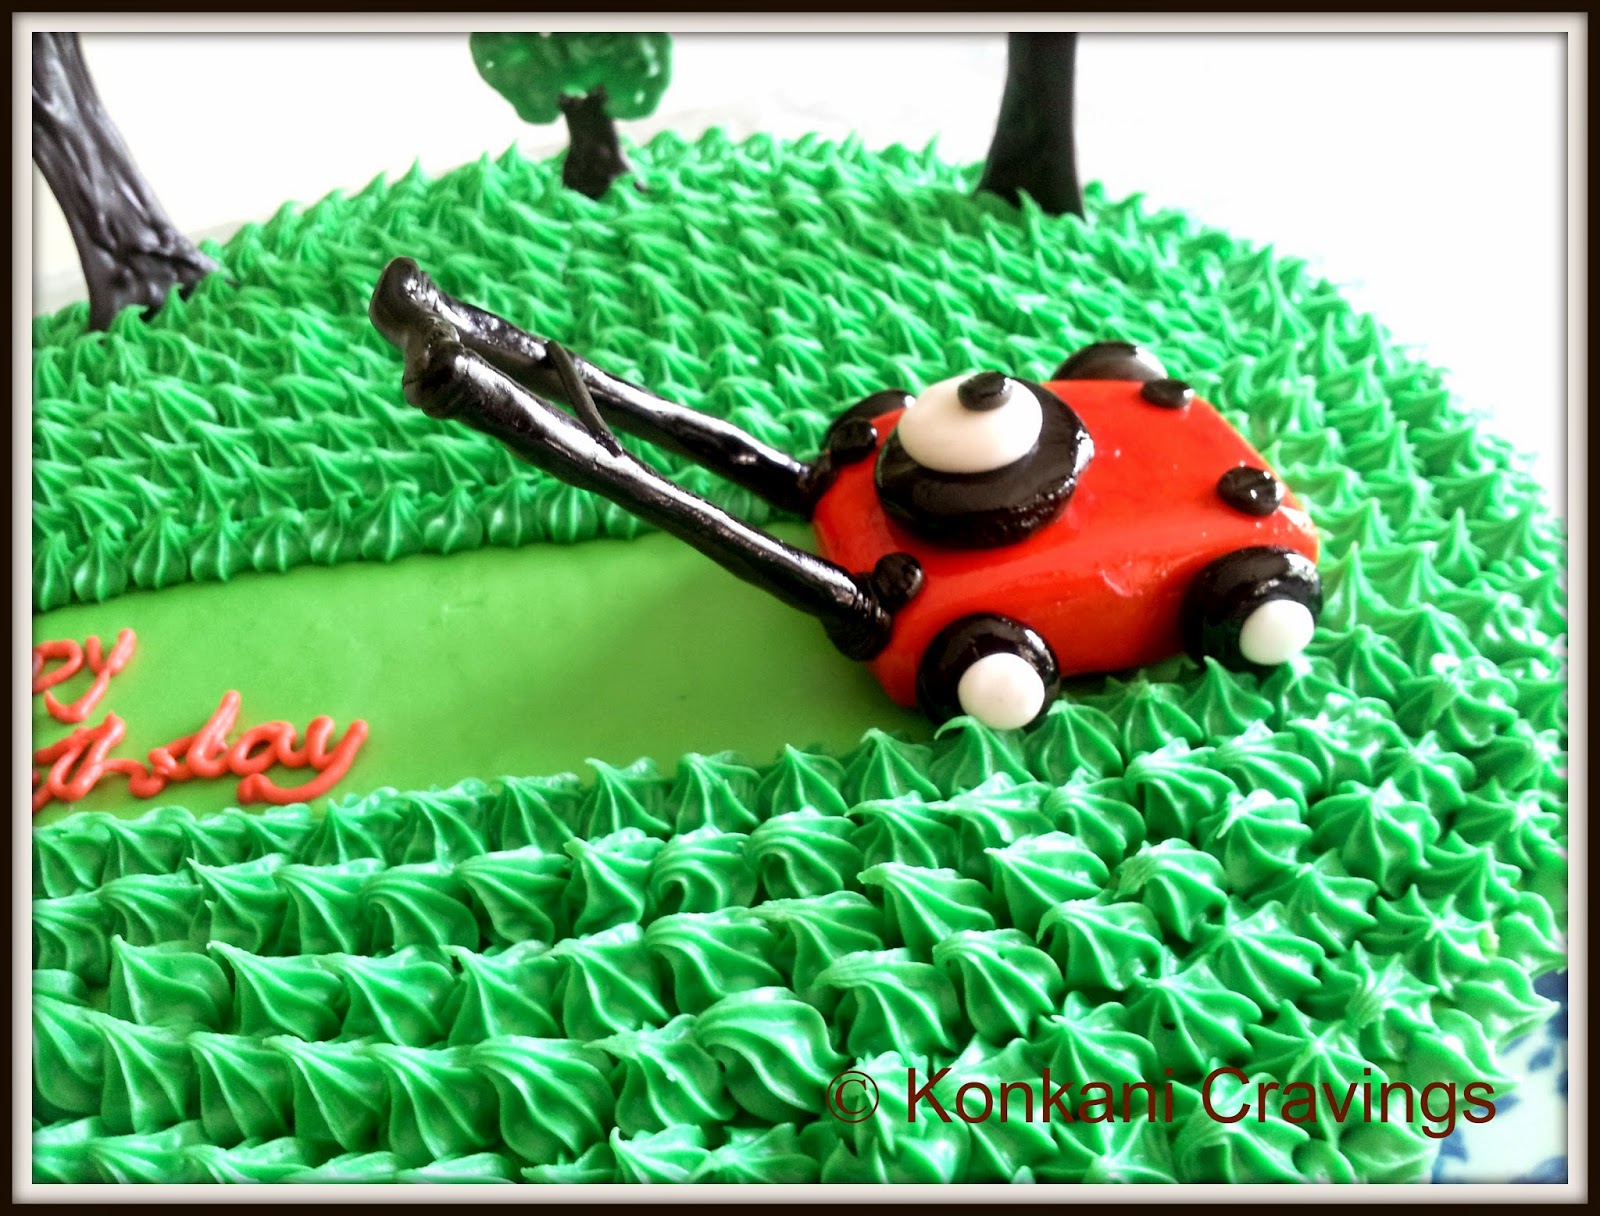 KONKANI CRAVINGS: Birthday Cake - Lawn+Mover+cake2